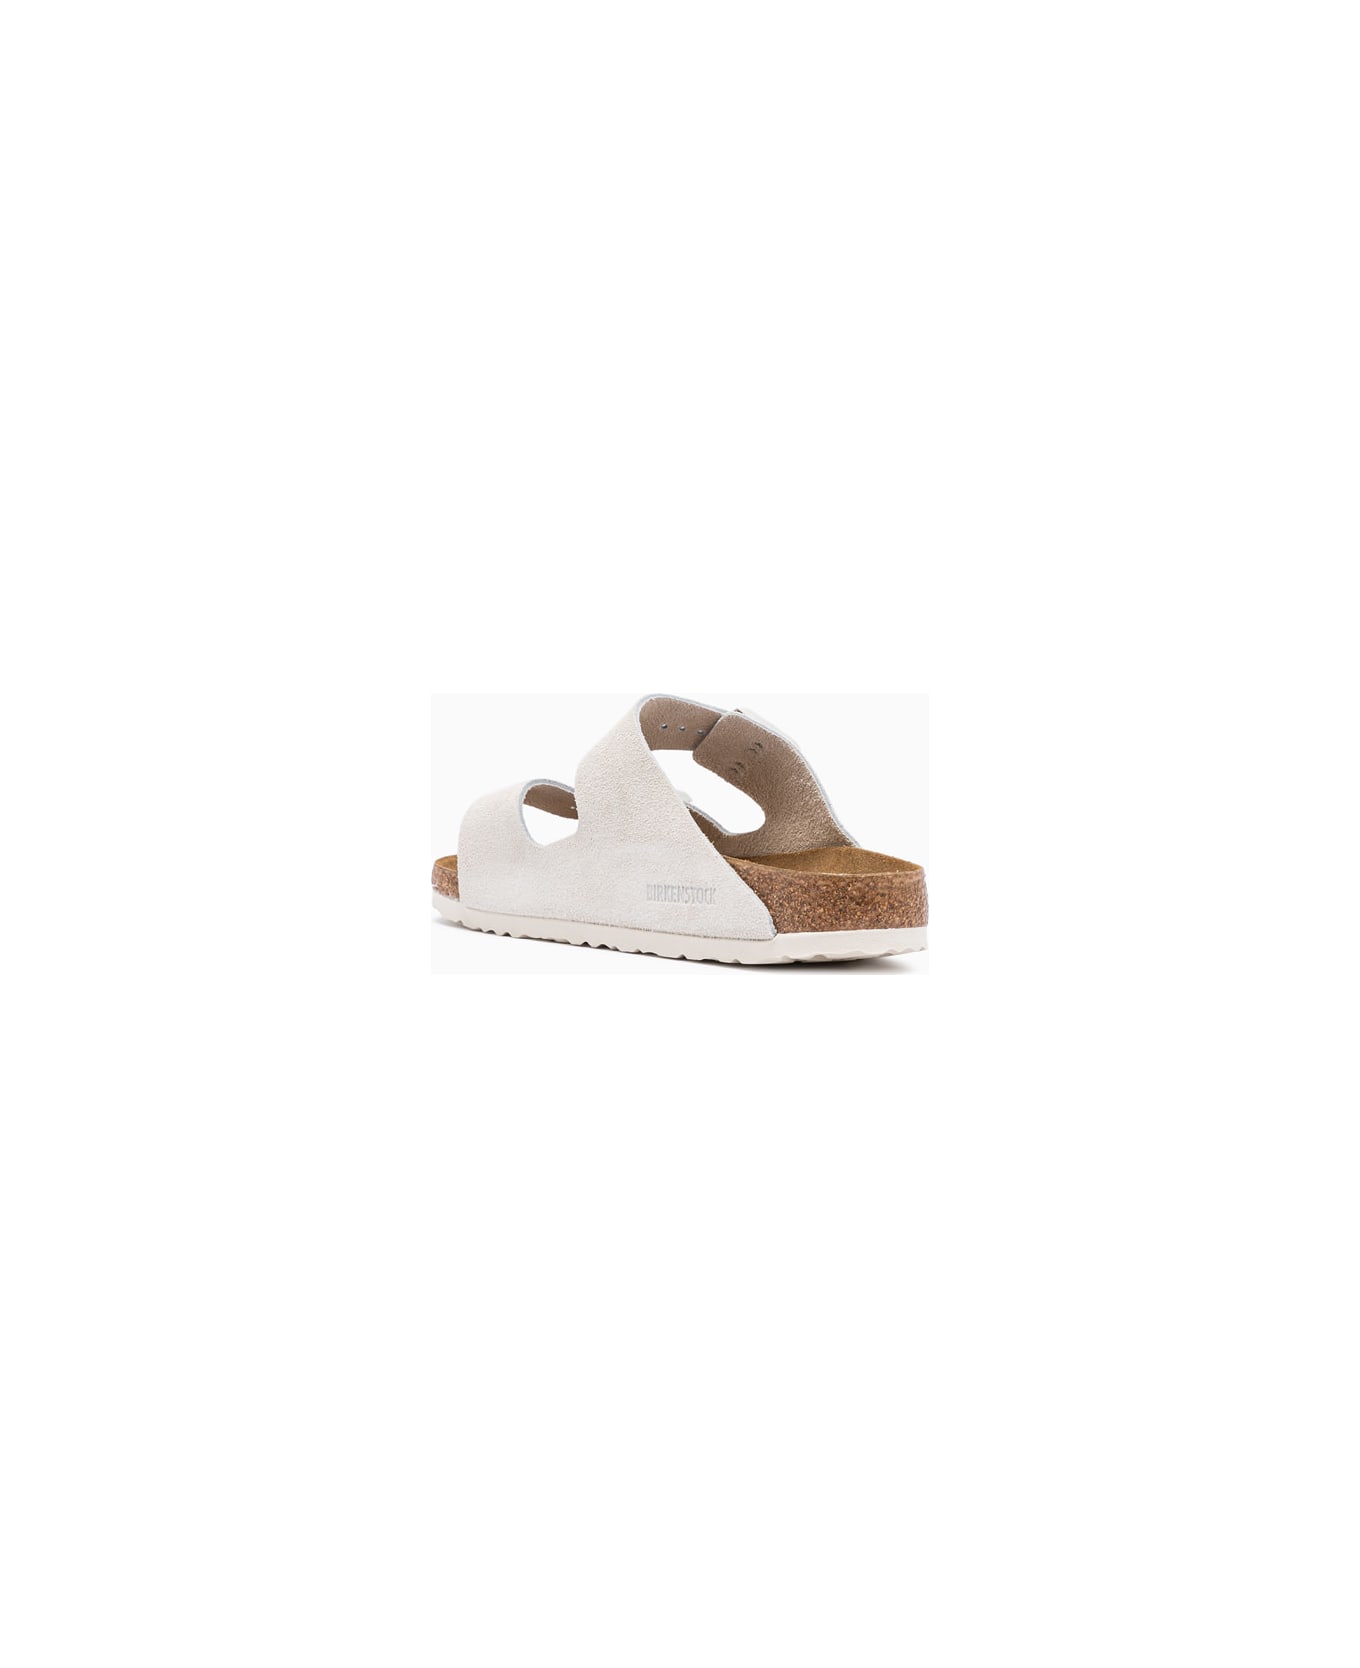 Birkenstock Arizona Bs Sandals - White